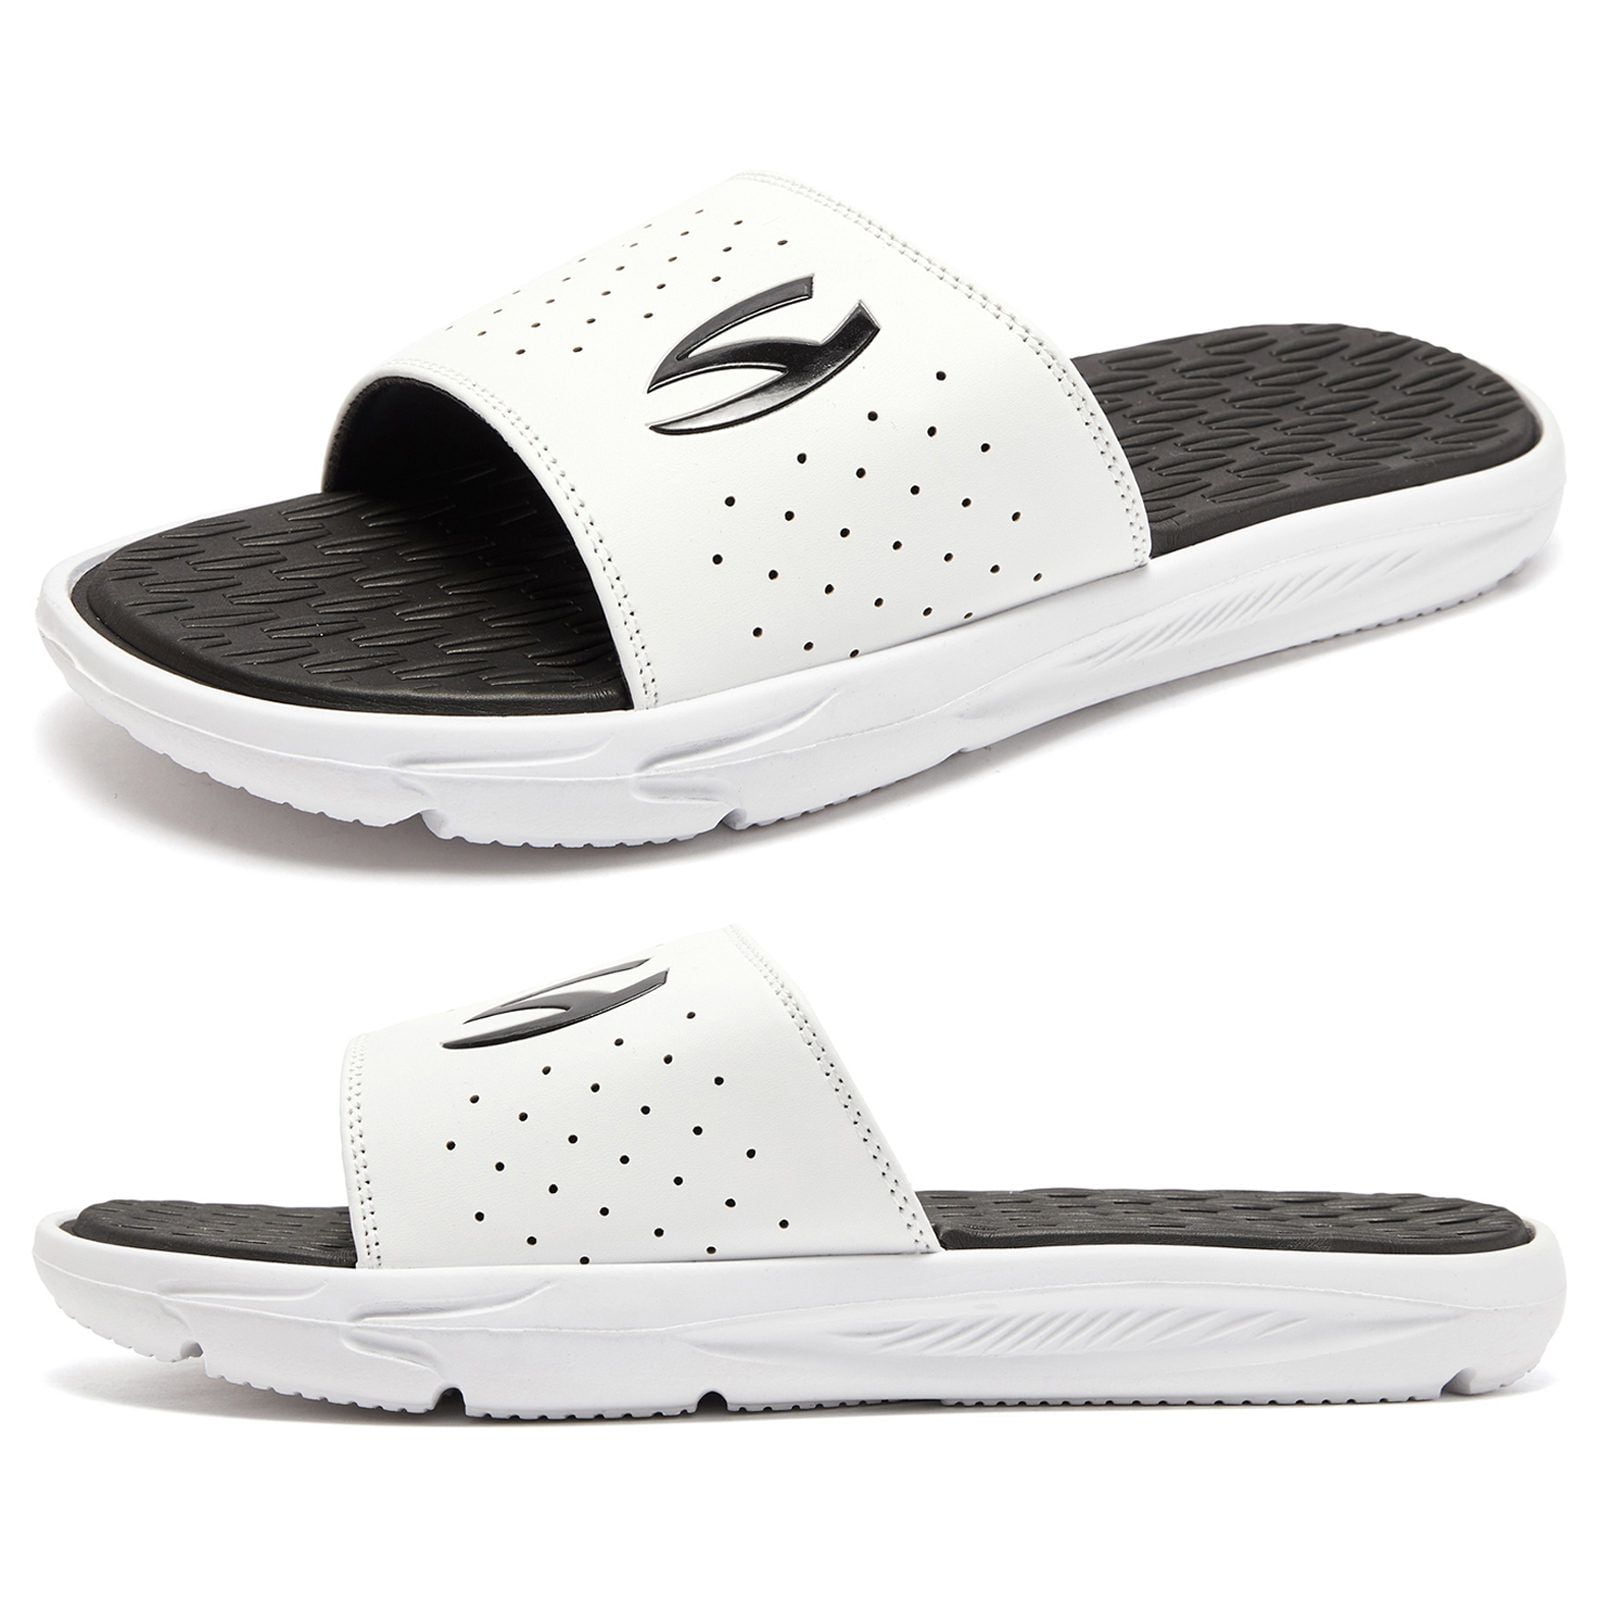 Men Casual Shoes Beach Sandals Thong Slipper Flip Flop For Indoor Outdoor 7.5-13 